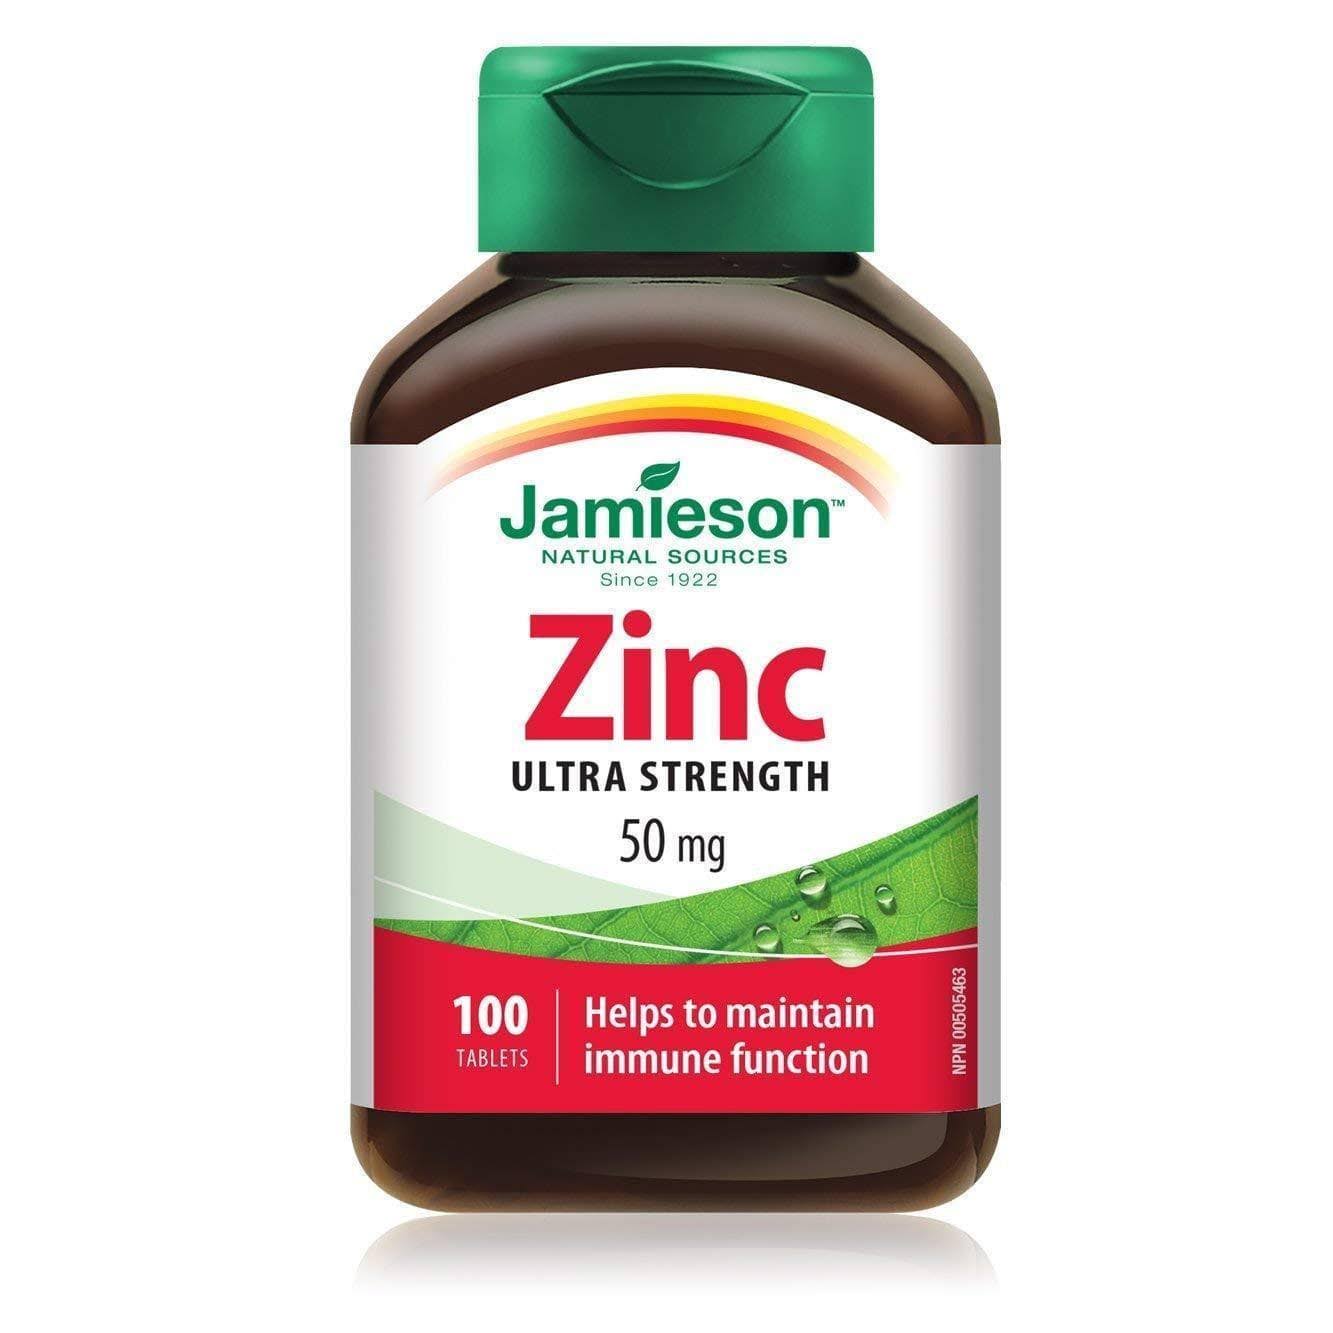 Jamieson Zinc Supplement - 50mg, 100 Tablets